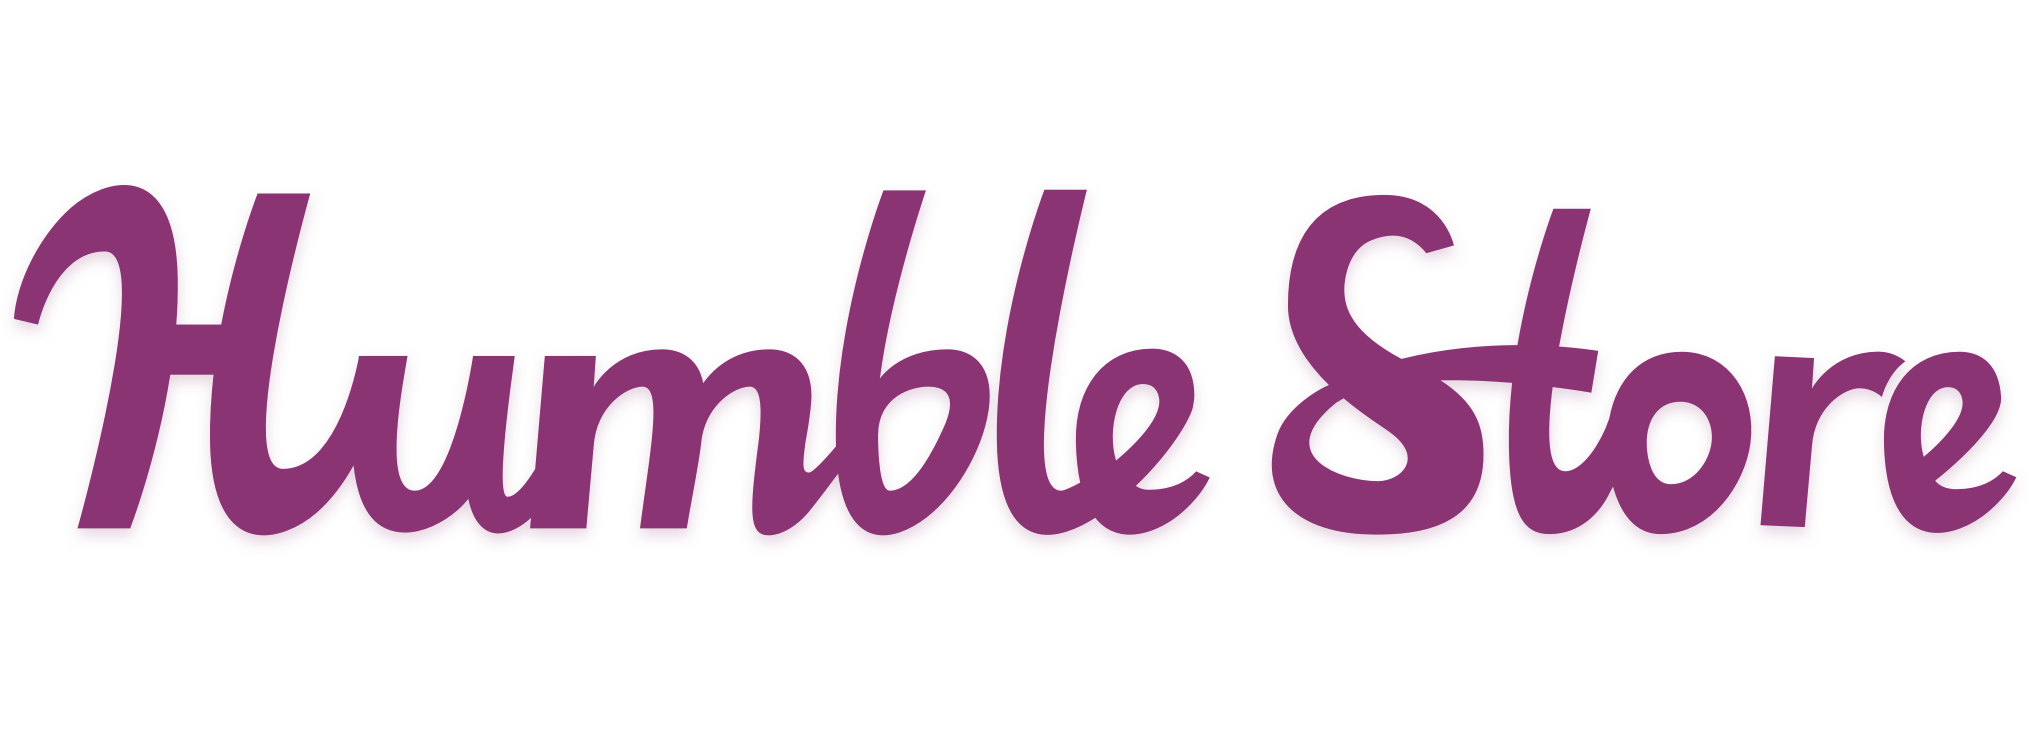 Humble_Store_logo.png